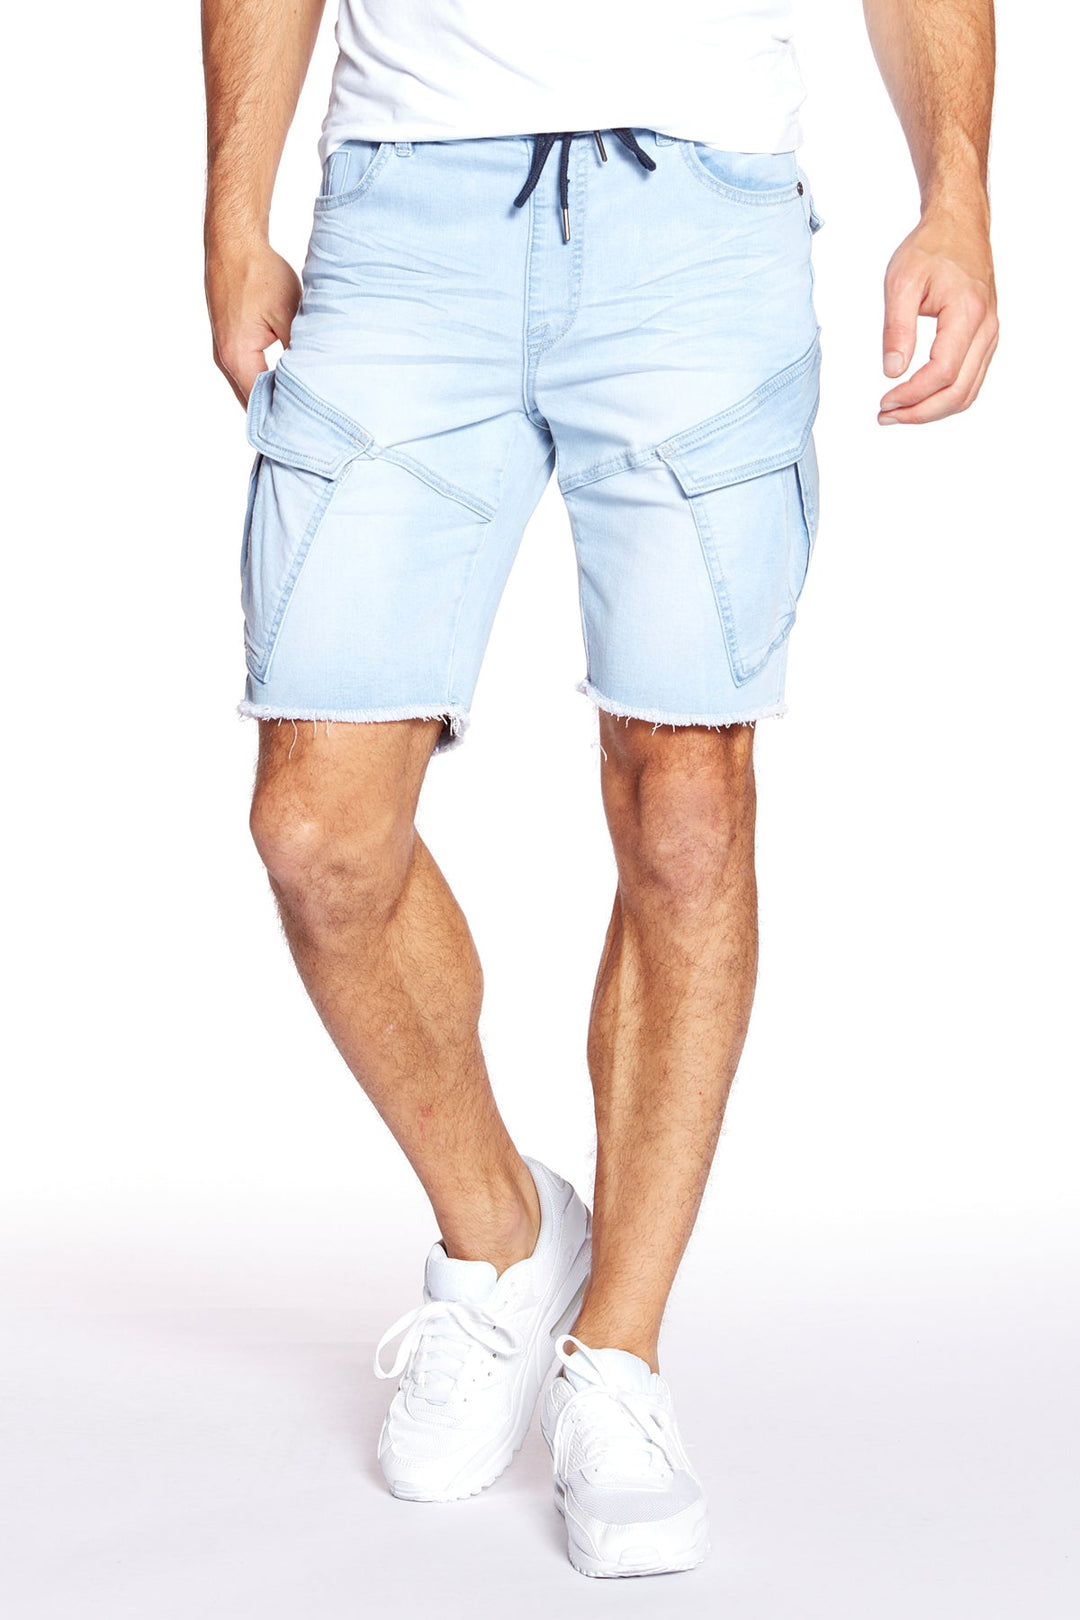 KRAVITZ - Mens Shorts With Bellowed Cargo pockets - Blue Bleach - DENIM SOCIETY™